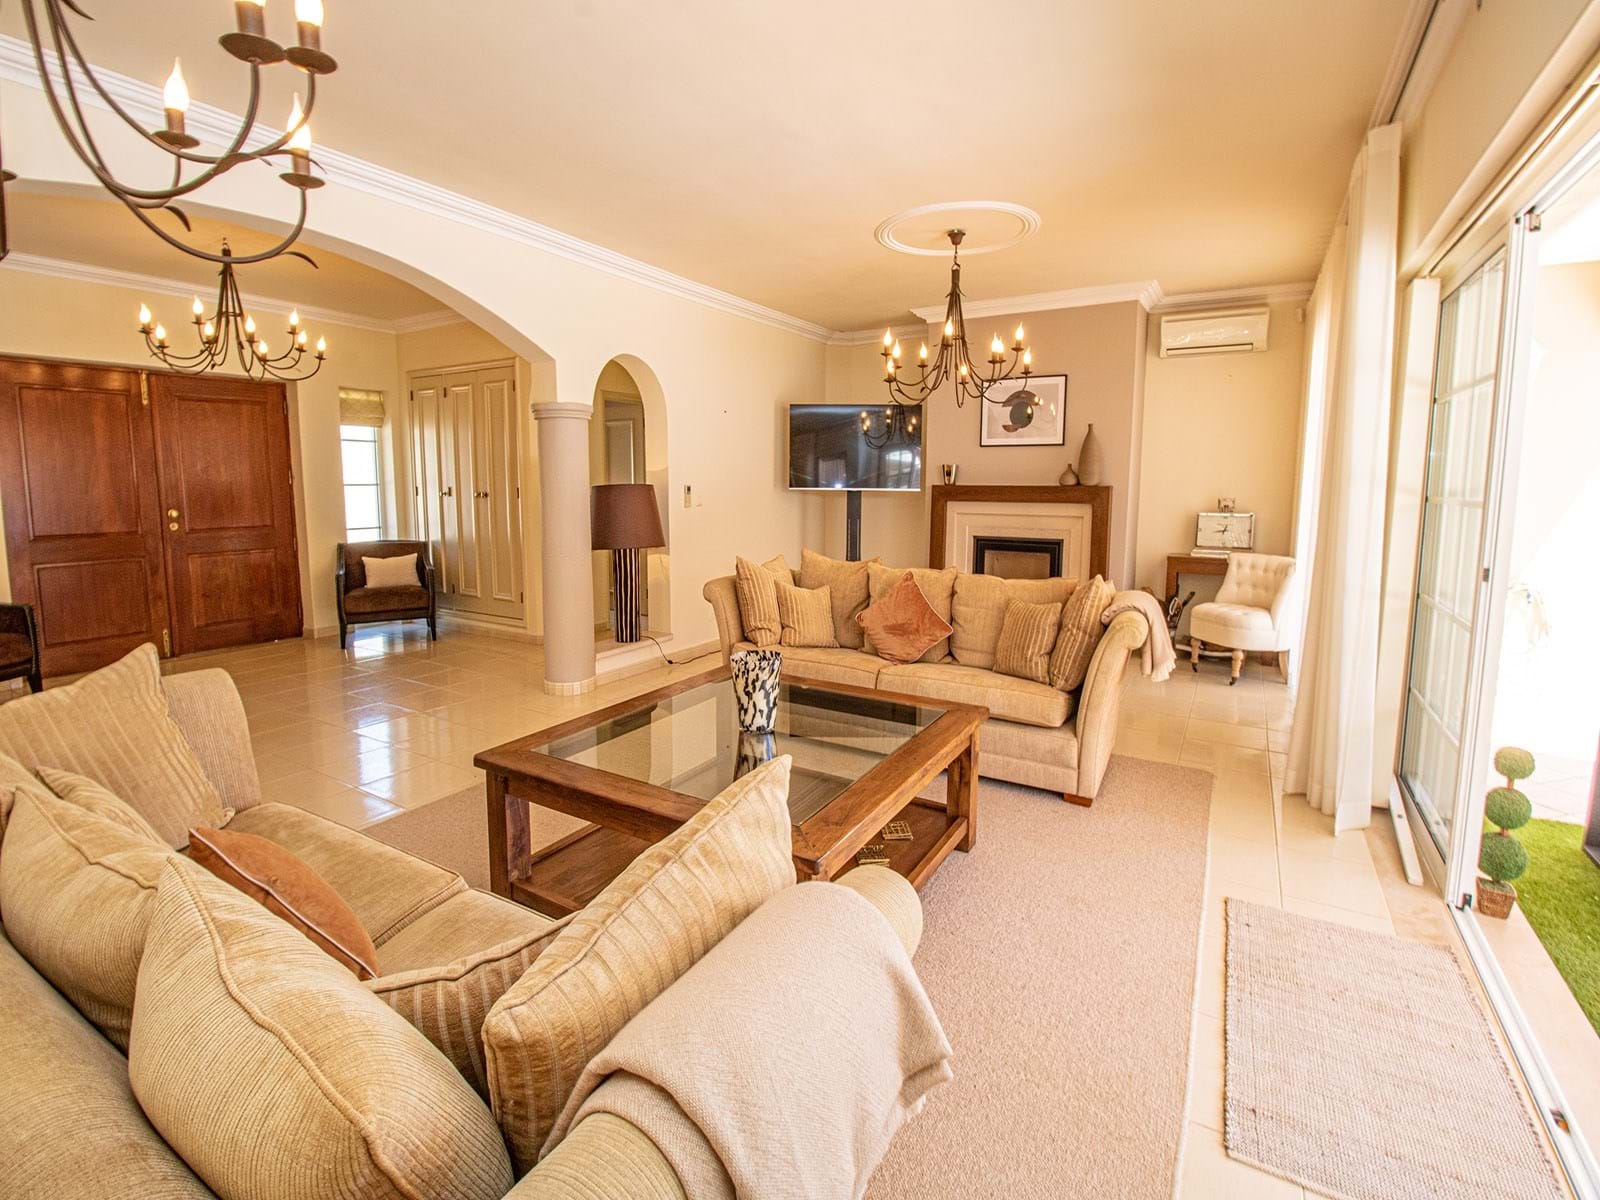 4 bed Villa For Rent in Loulé, Central Algarve - thumb 3